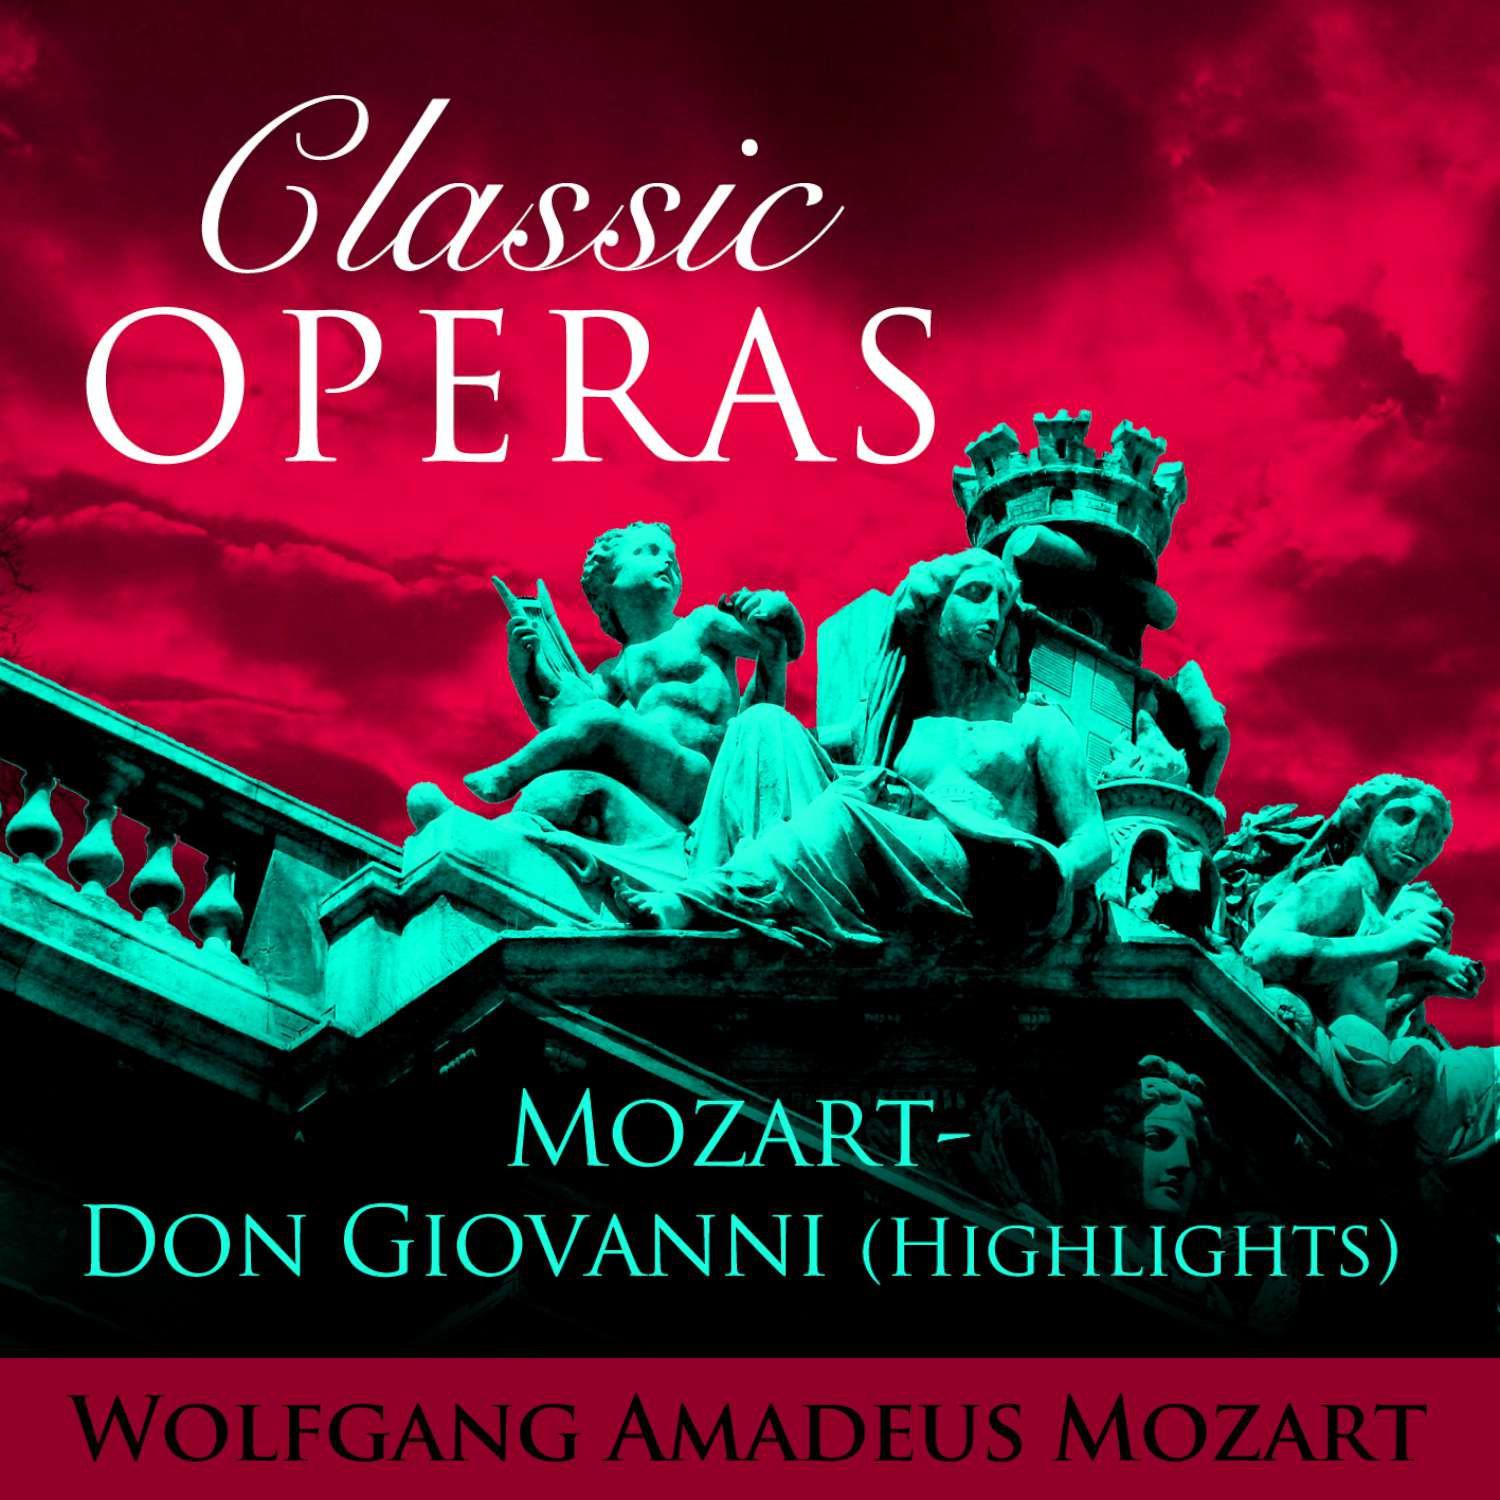 Classic Opera's - Don Giovanni (Highlights)